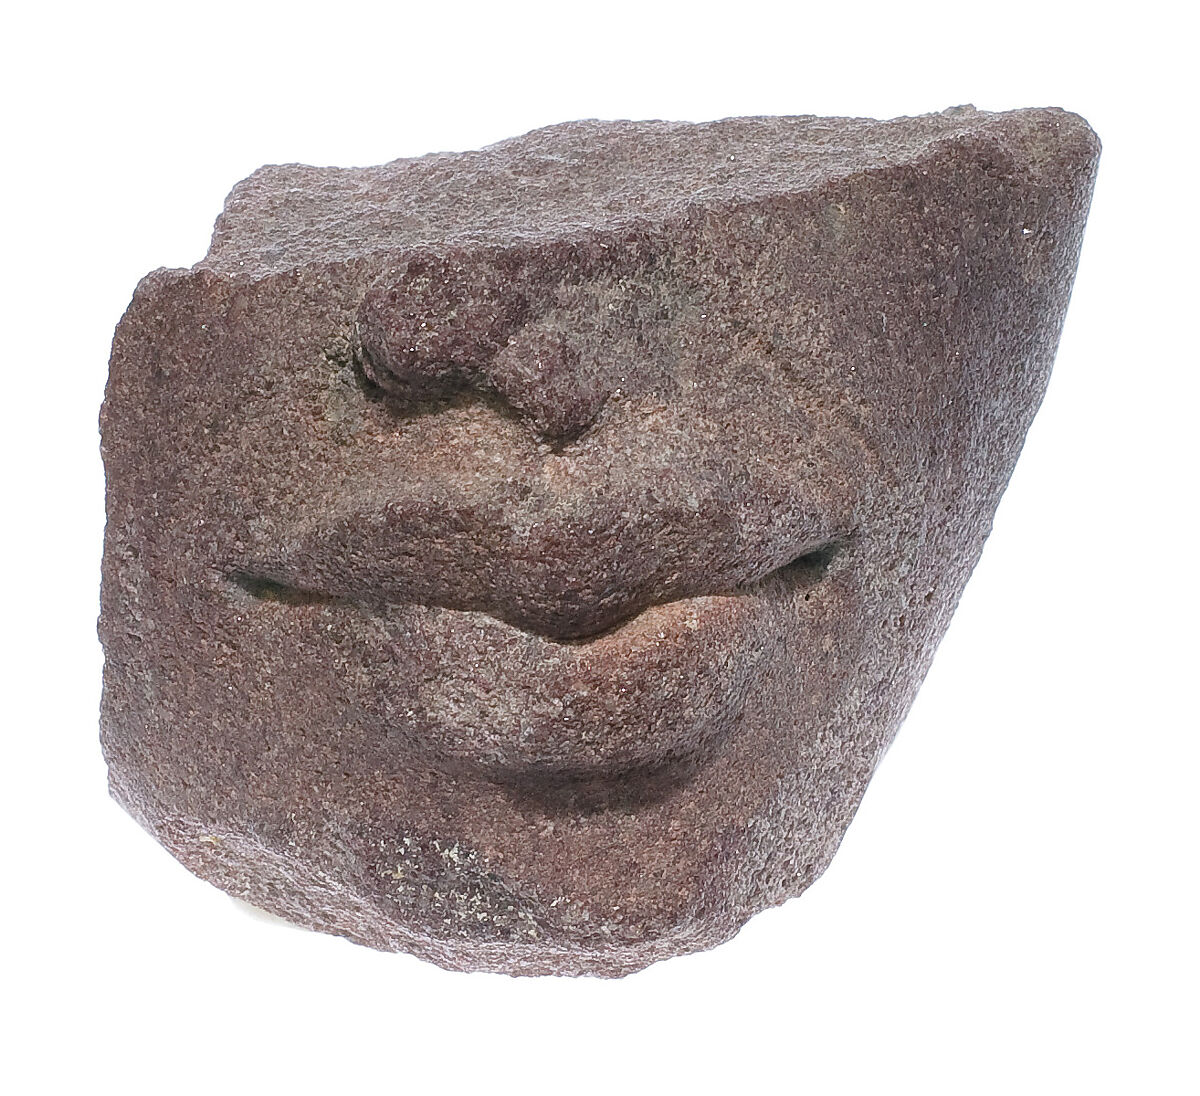 Mouth of Akhenaten or Nefertiti, Red quartzite 